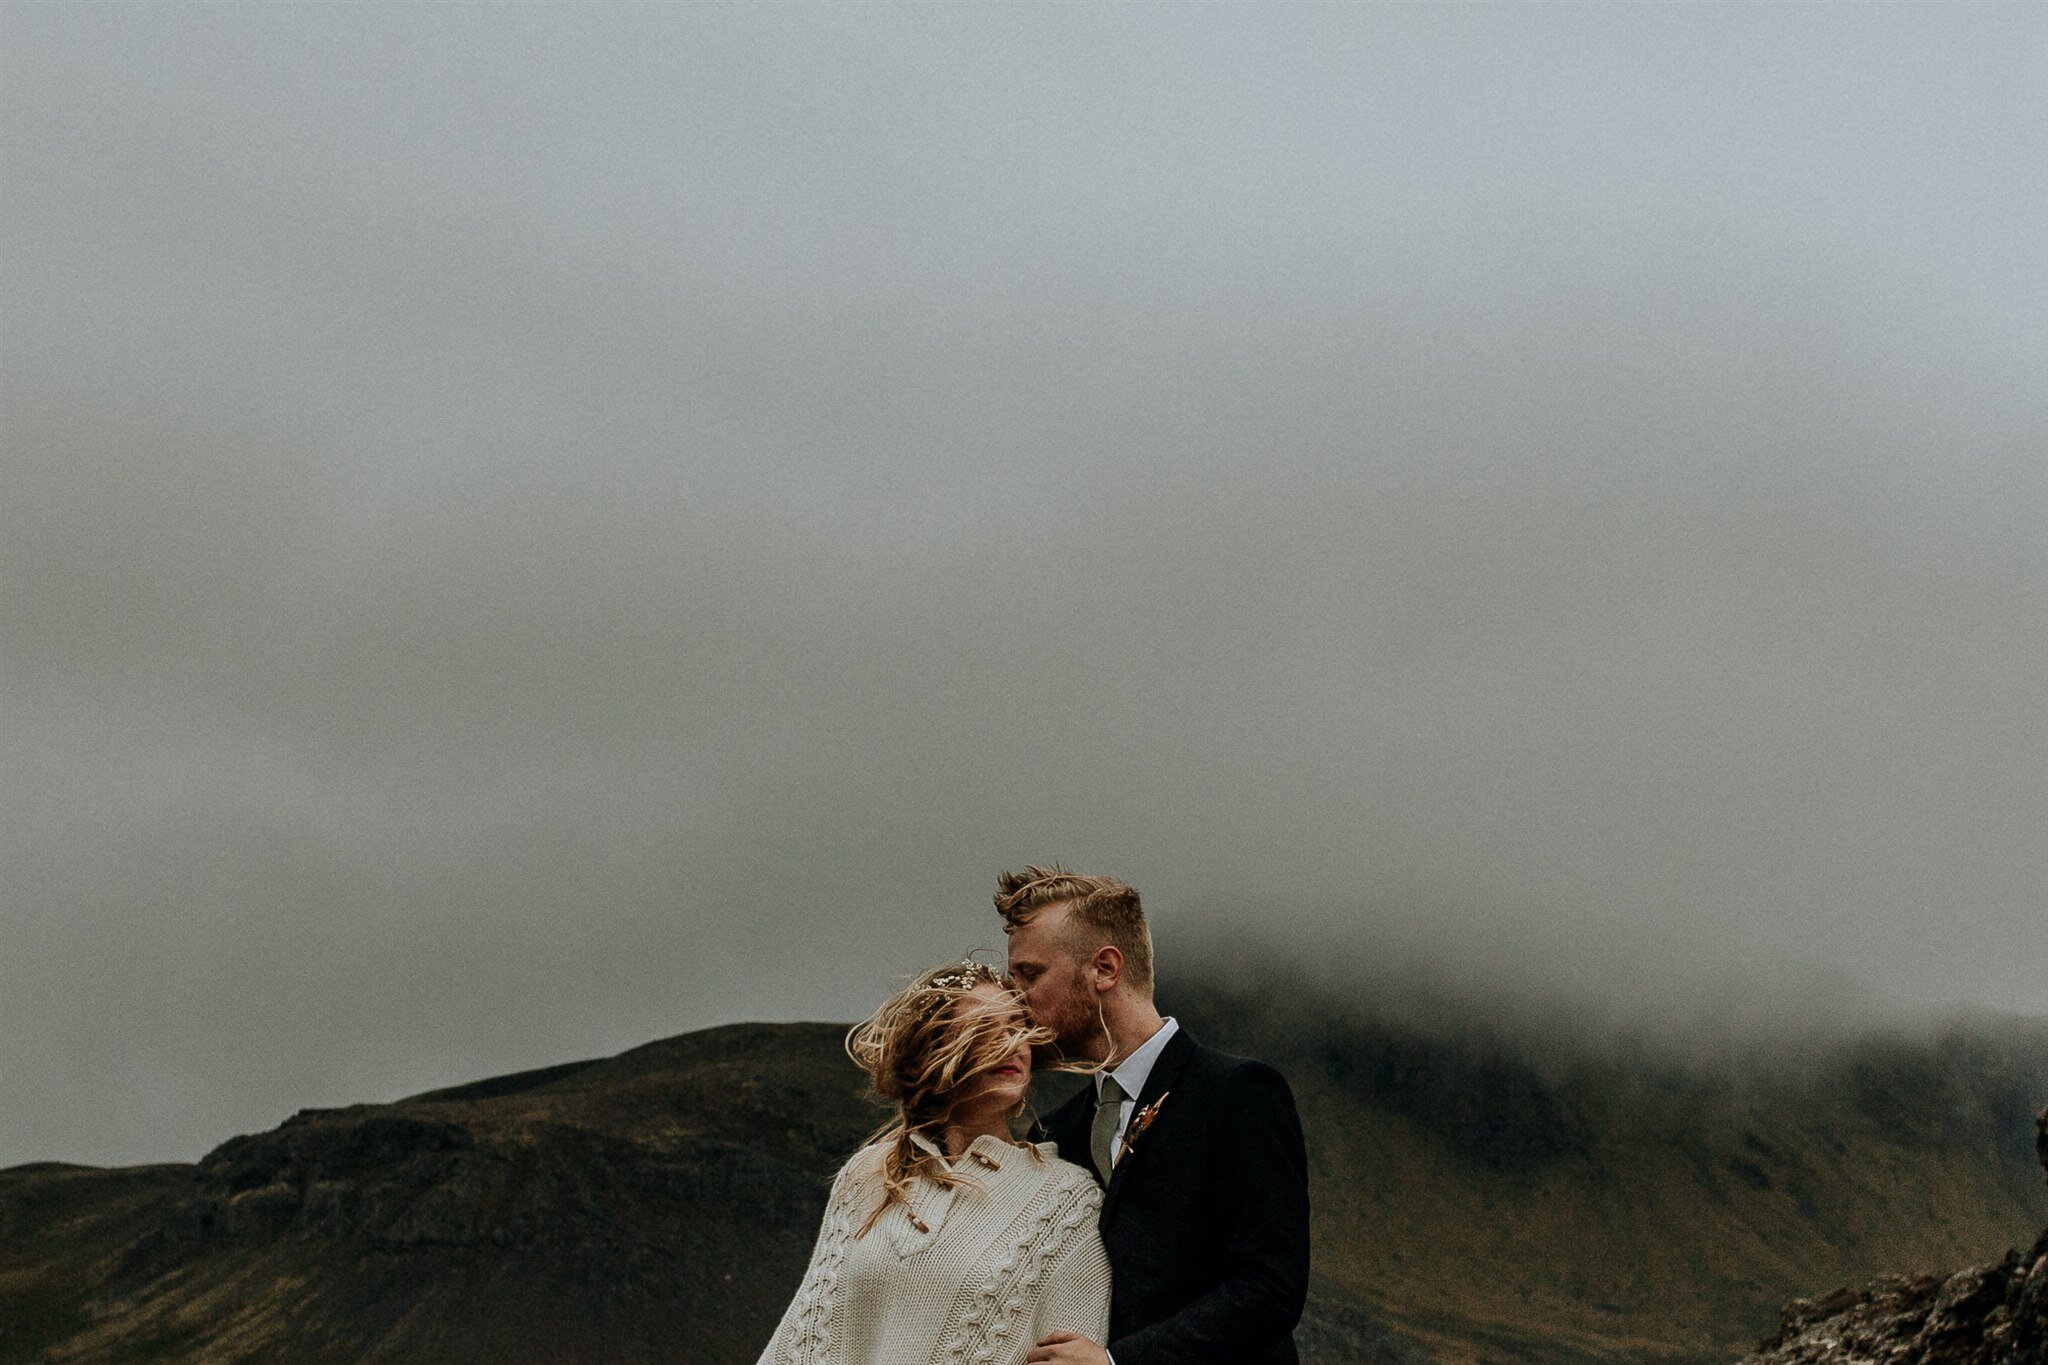 Budir black church Iceland elopement photos | Iceland elopement photographer  